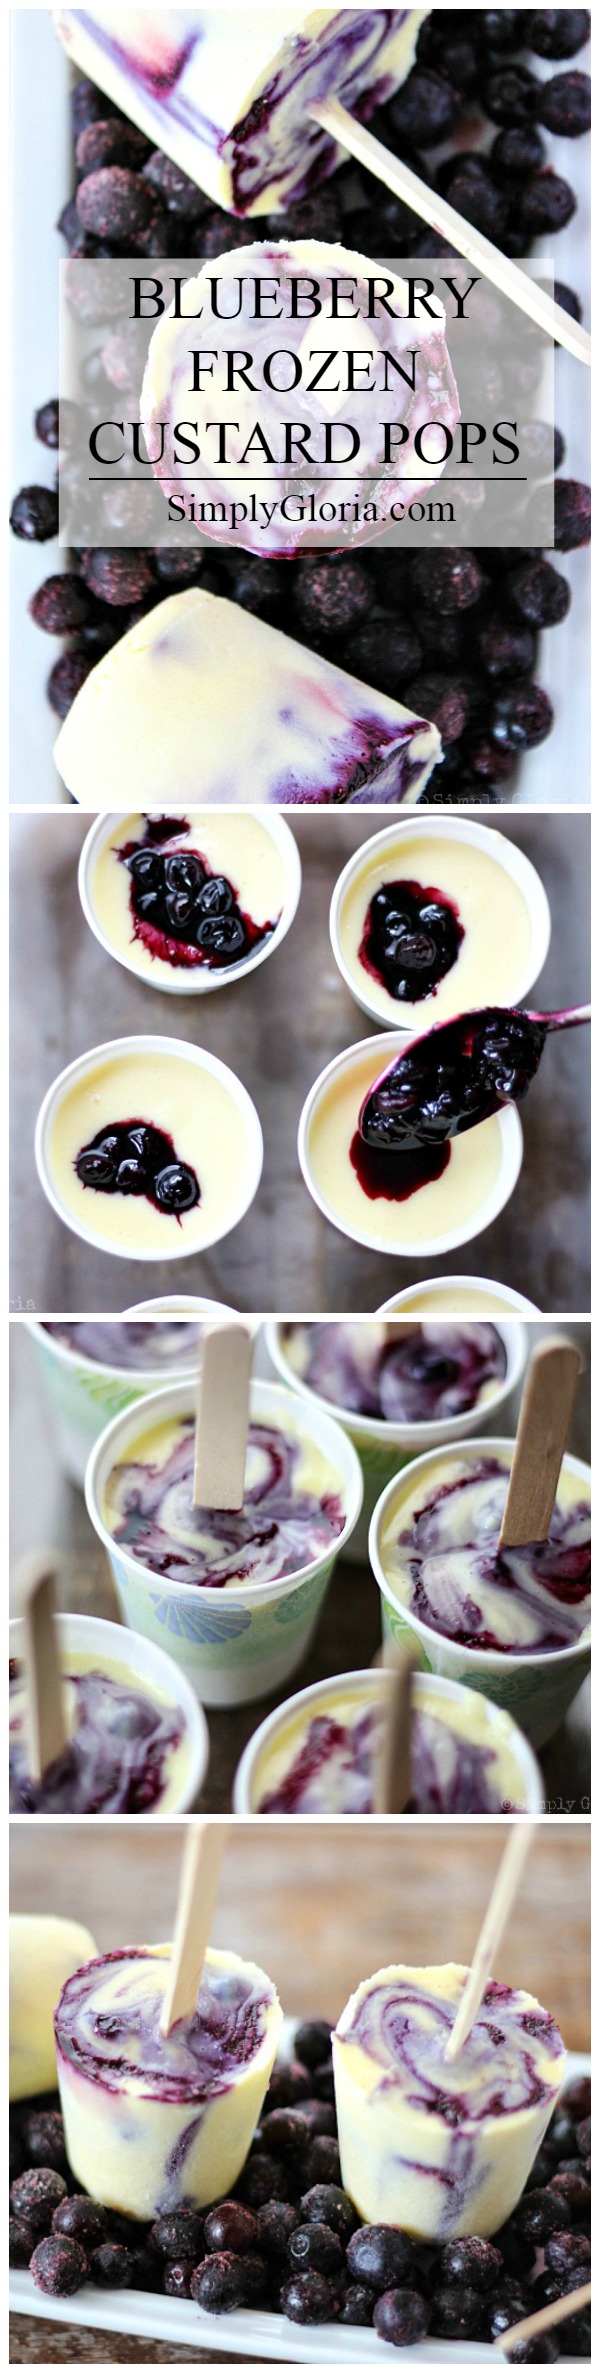 Easy to make Blueberry Frozen Custard Pops via SimplyGloria.com #popsicles